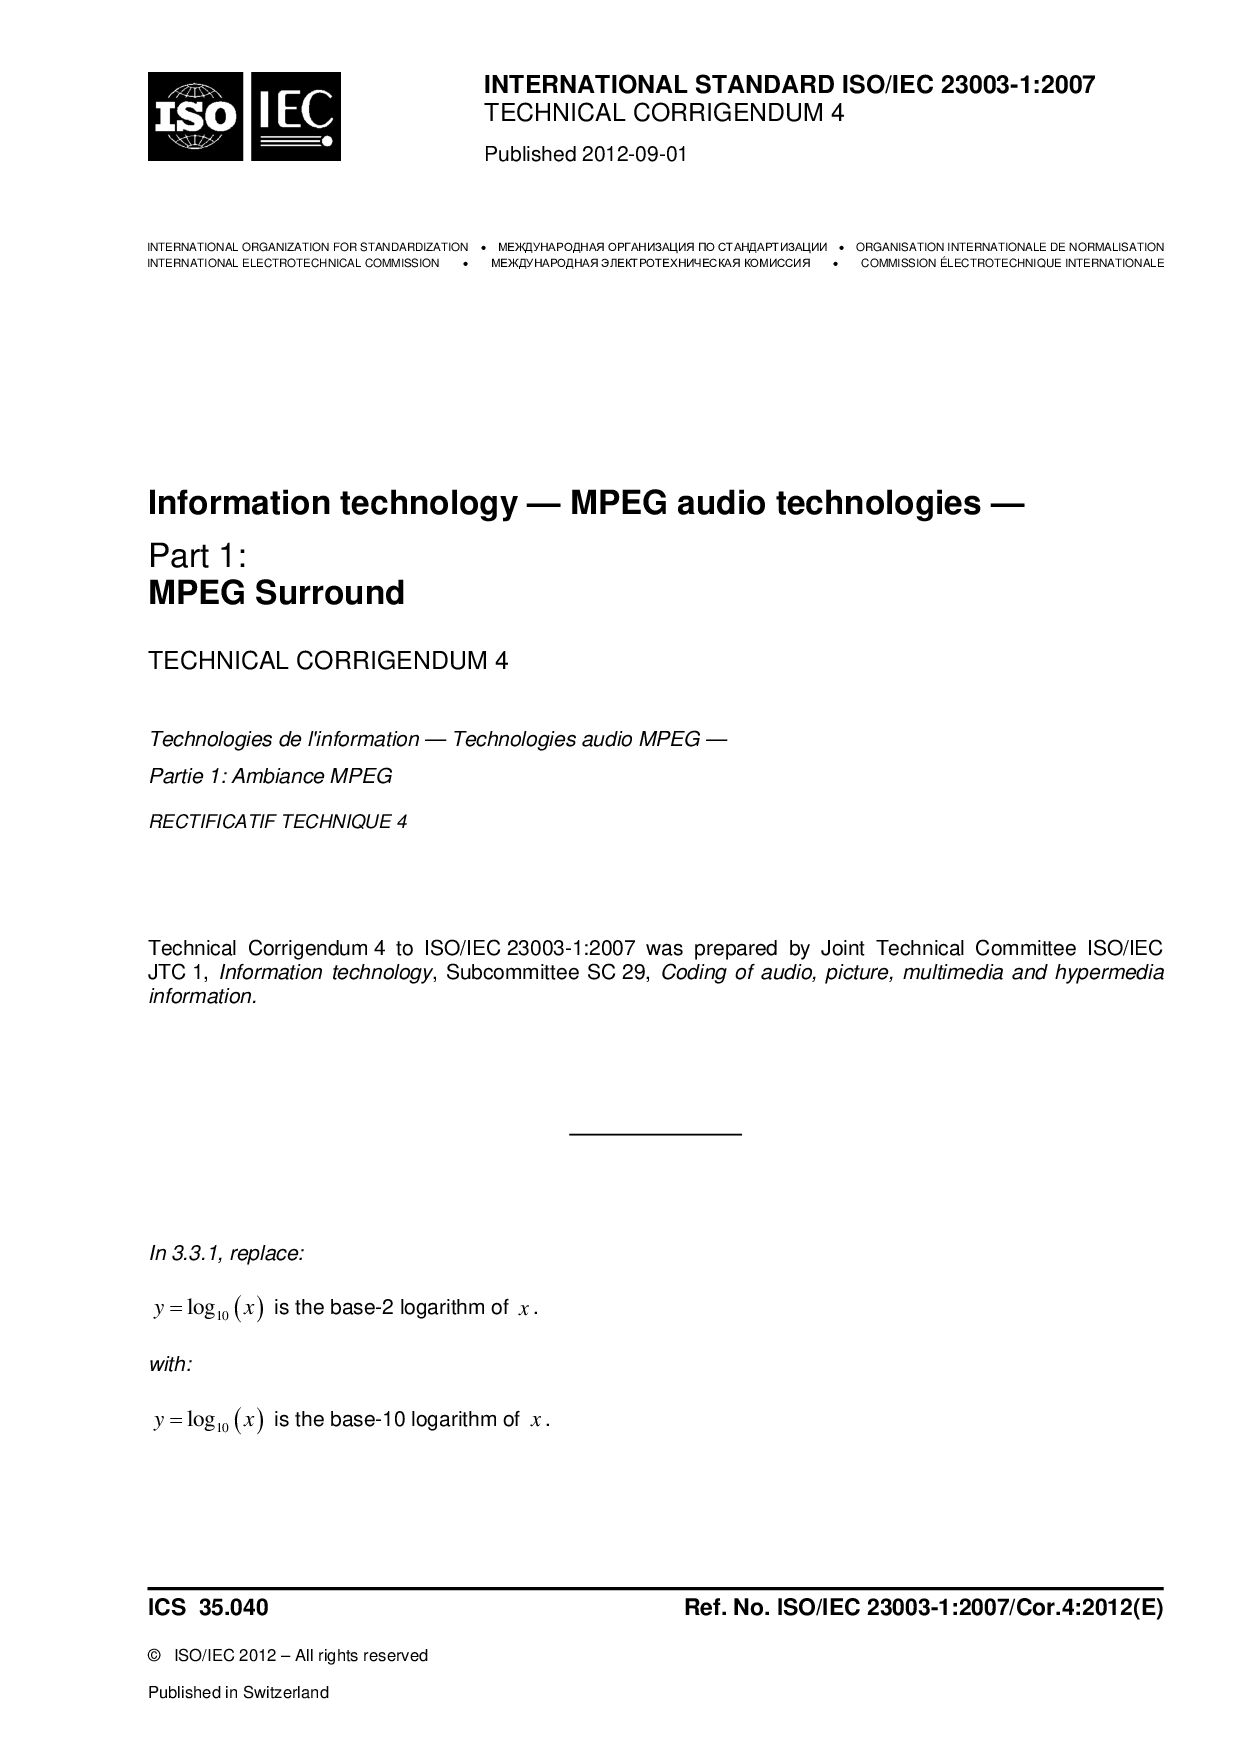 ISO/IEC 23003-1:2007/Cor 4:2012